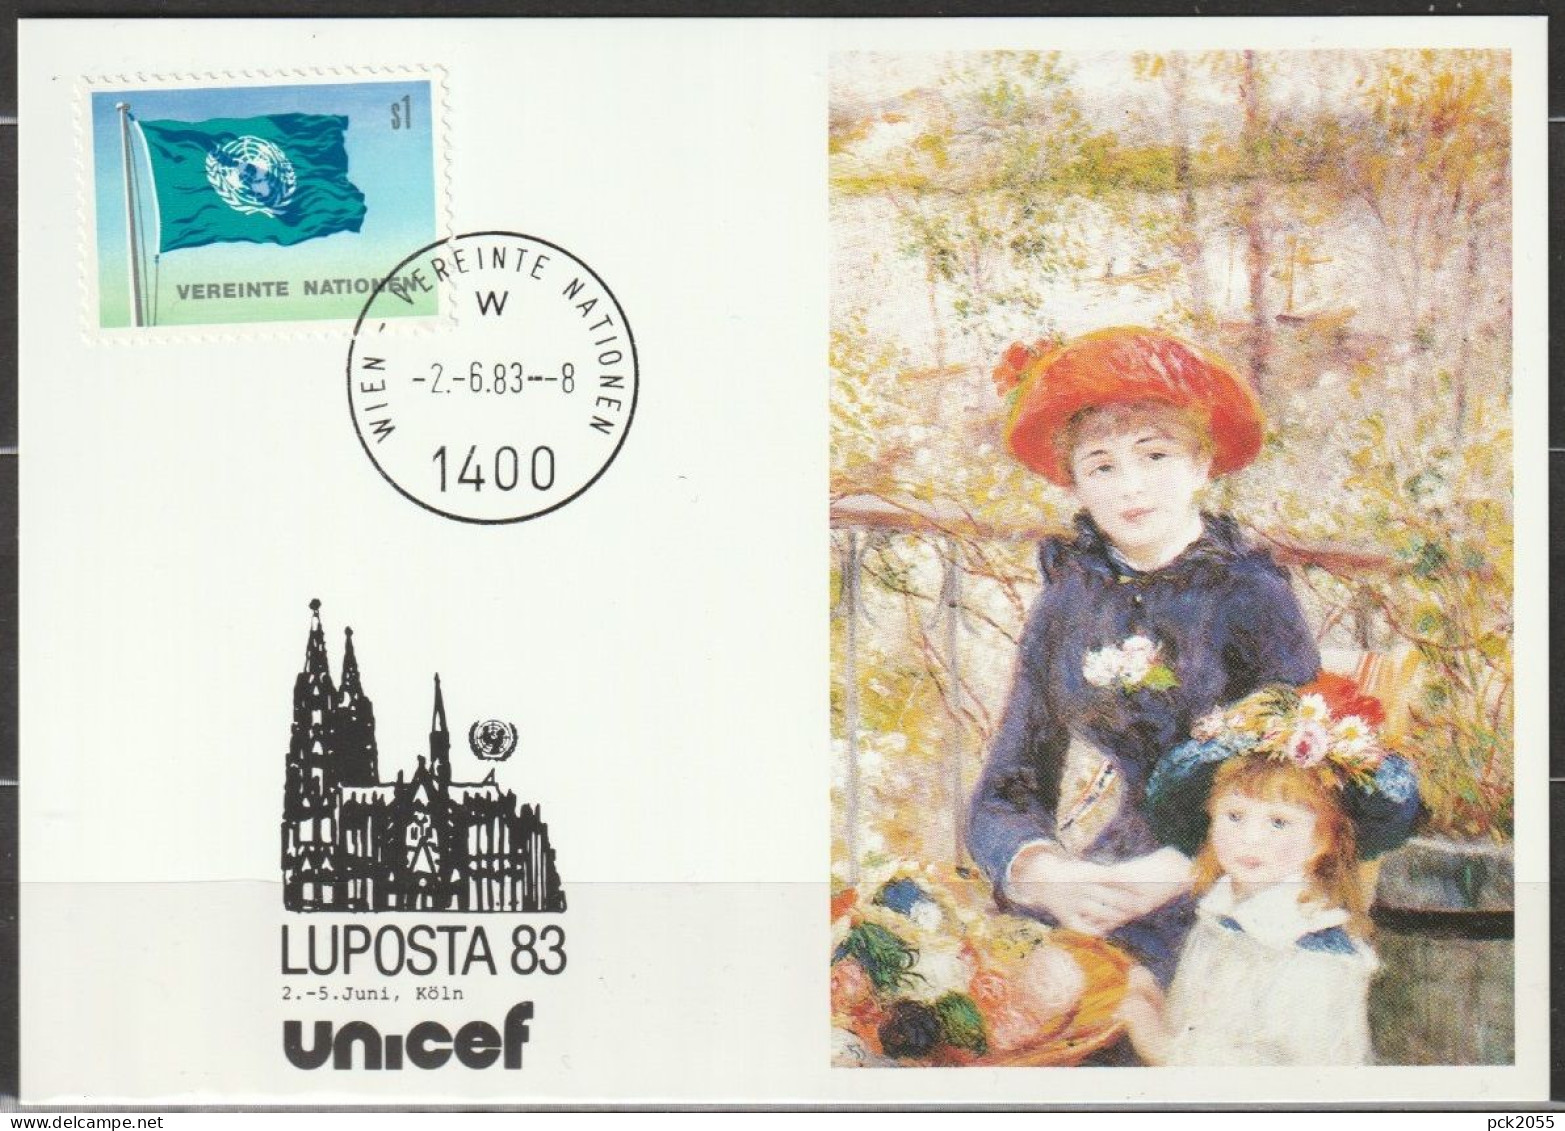 UNO Wien 1983 UNICEF Kunstkarte Sonderstempel LUPOSTA83 Köln MiNr.2   ( D 6997 ) - Covers & Documents